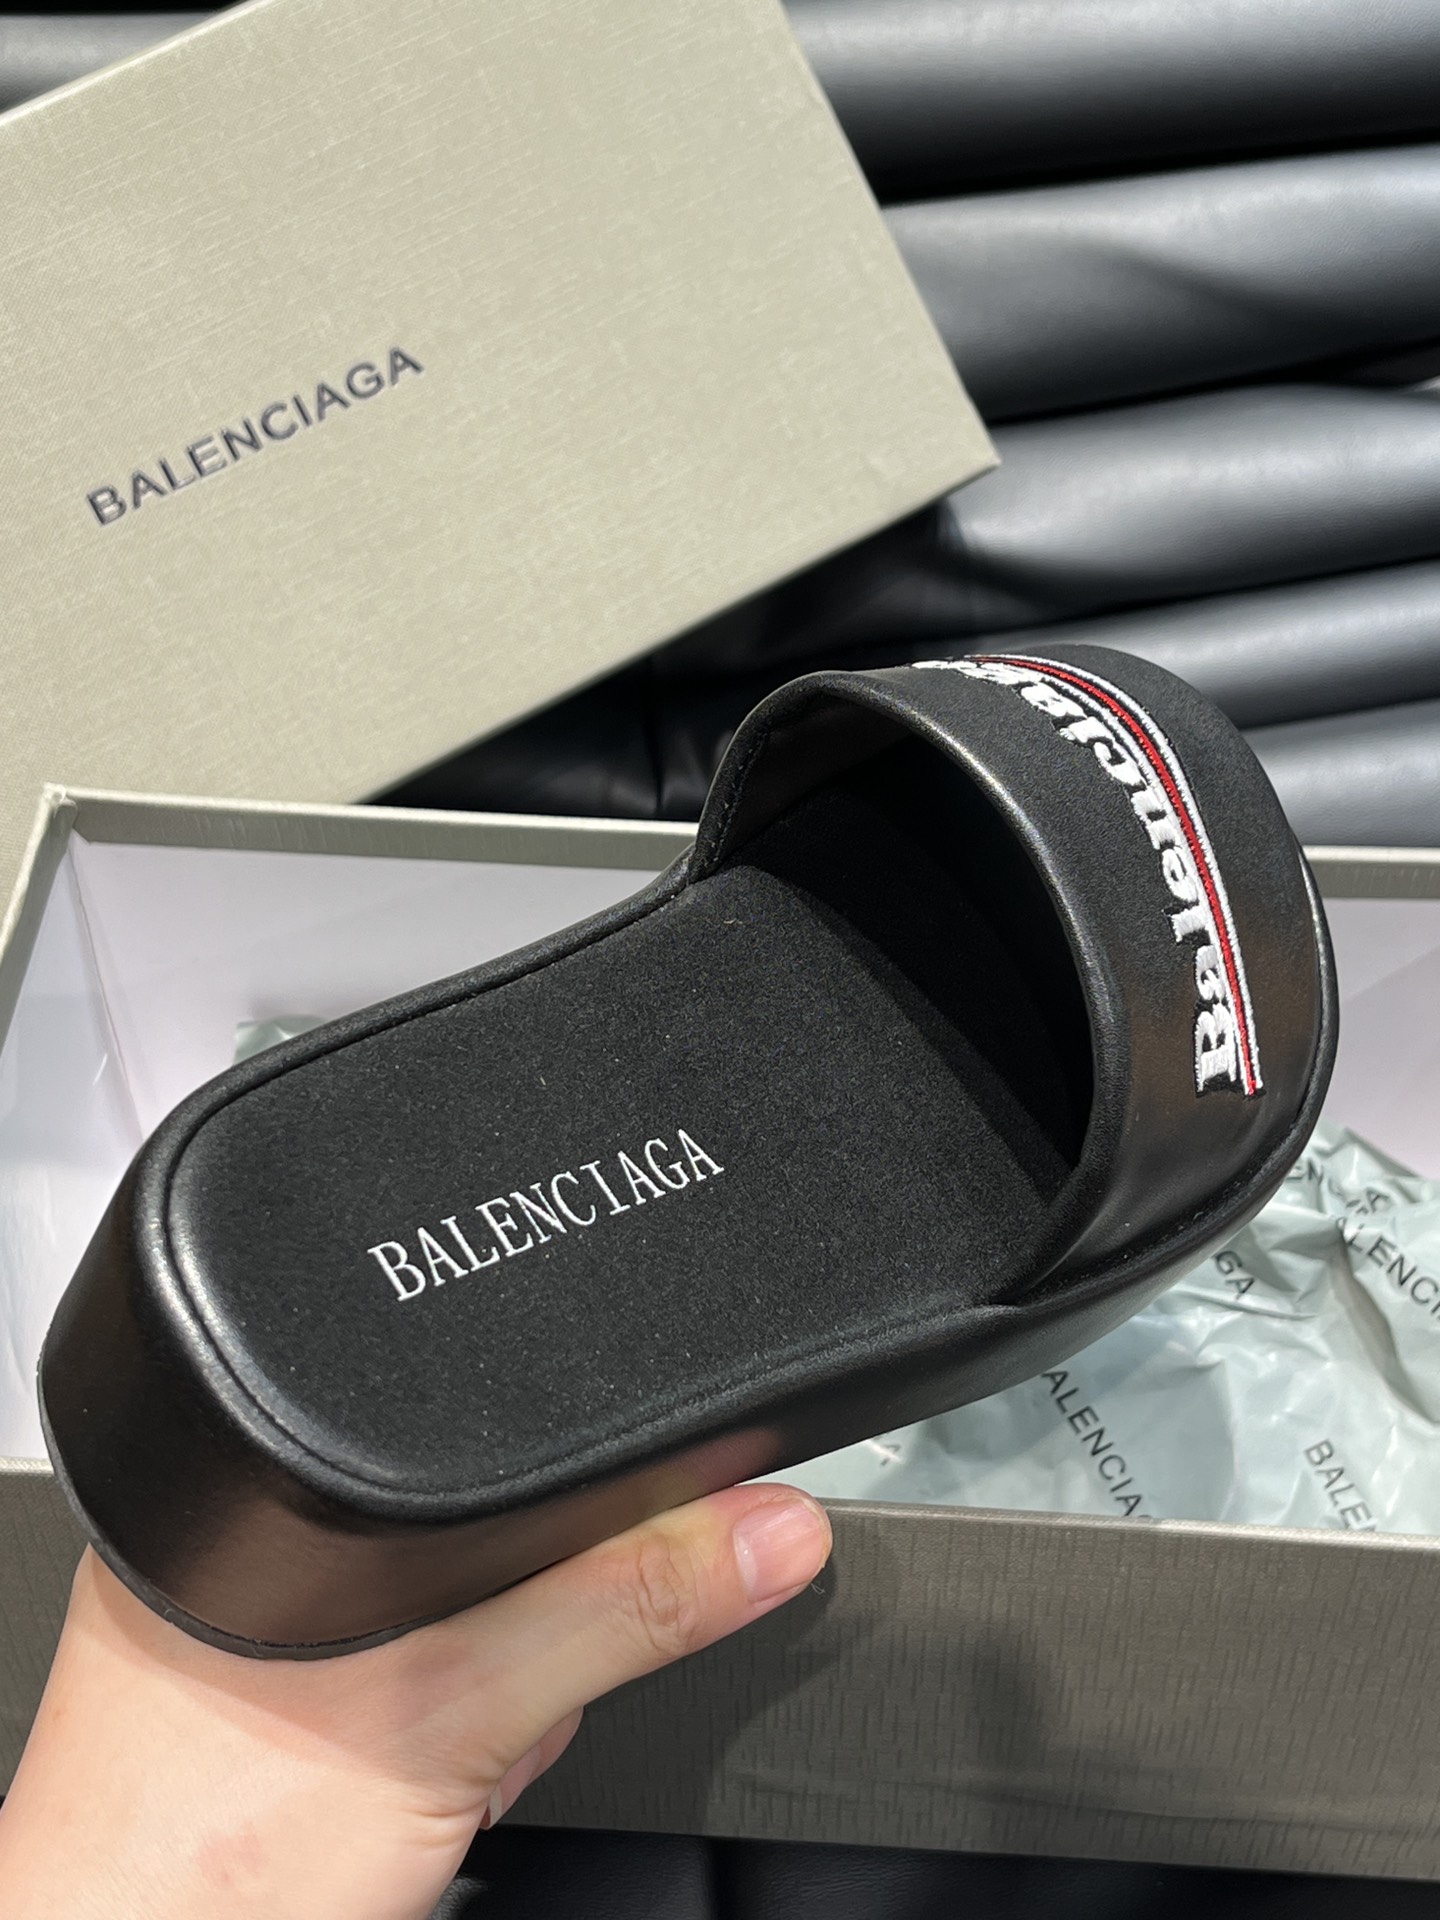 Balenciaga巴黎世家新款情侣厚底拖鞋可乐刺绣拖鞋一如既往的时尚顶级版本鞋面牛皮搭配乐乐刺绣特别的